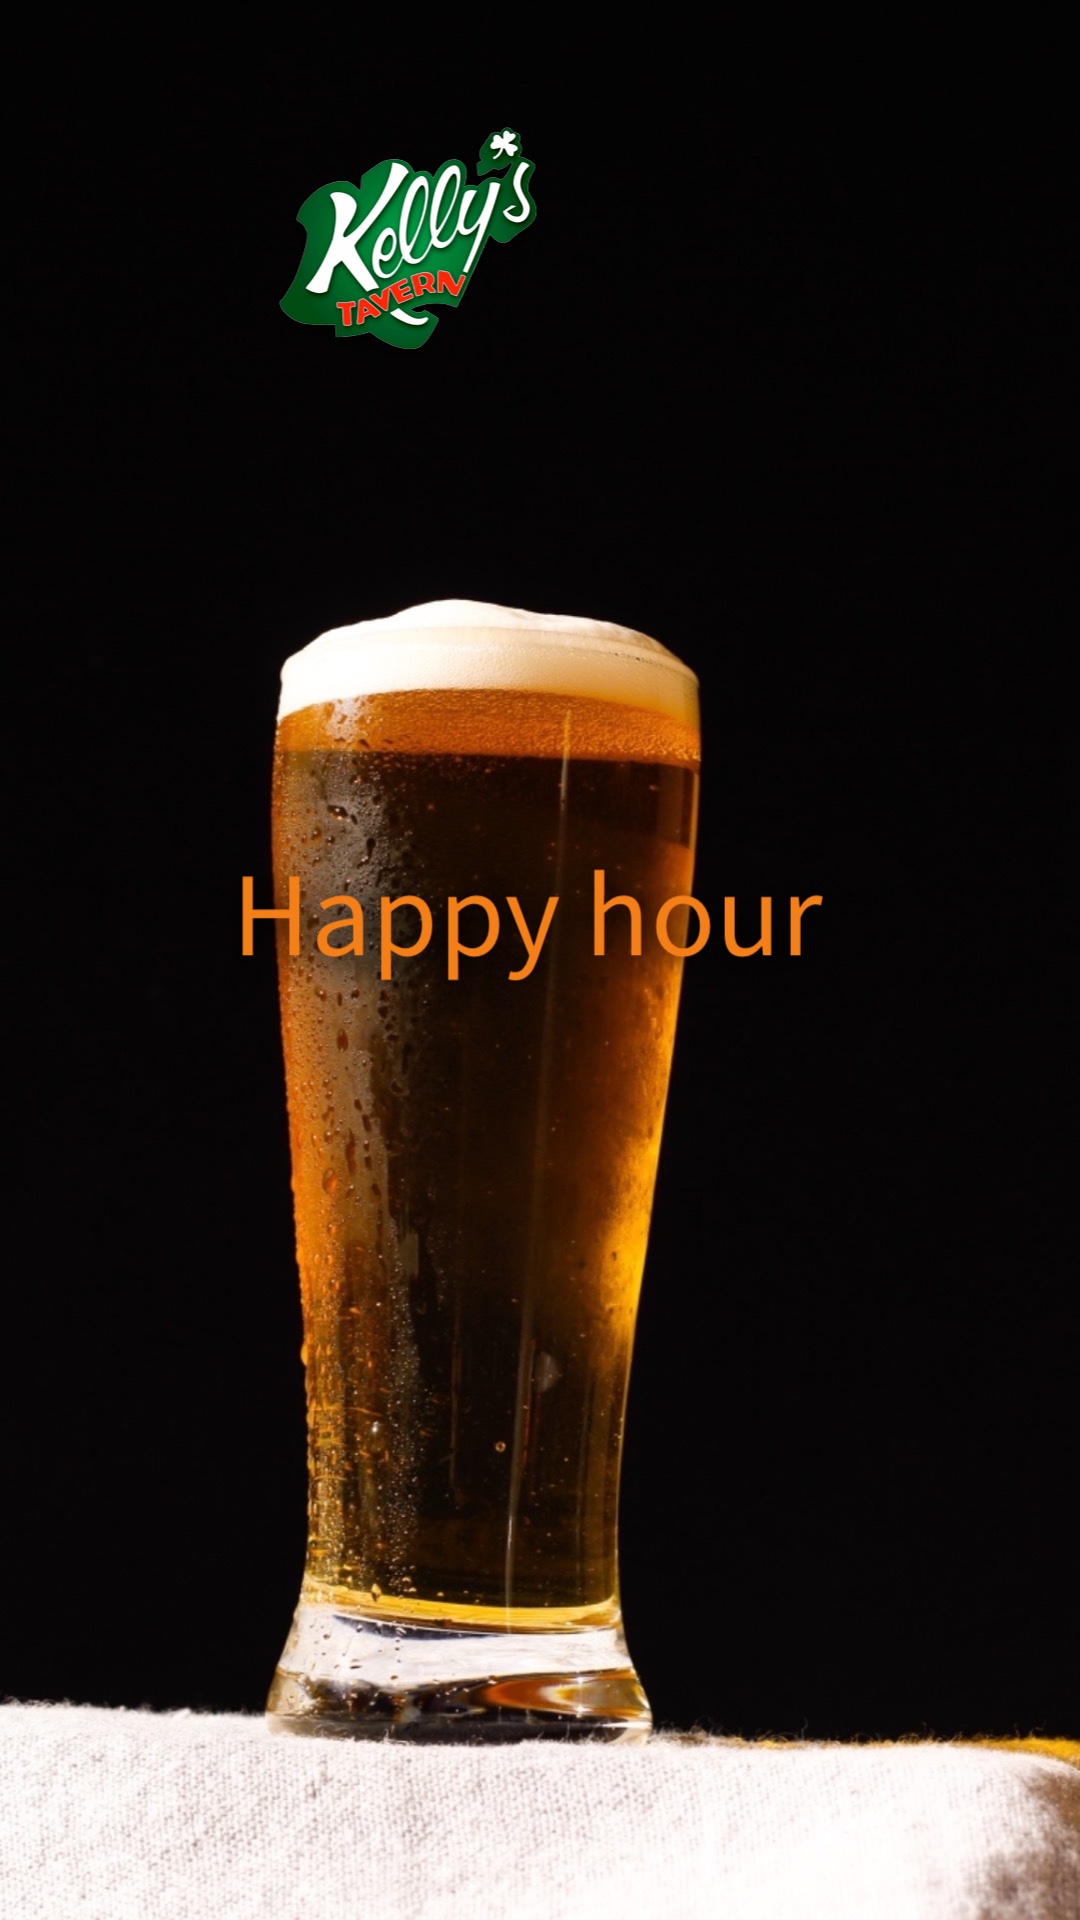 #Tableware #Drinkware #Beer #Liquid #Beer glass #Barware #Fluid #Alcoholic beverage #Pint glass #Ice beer